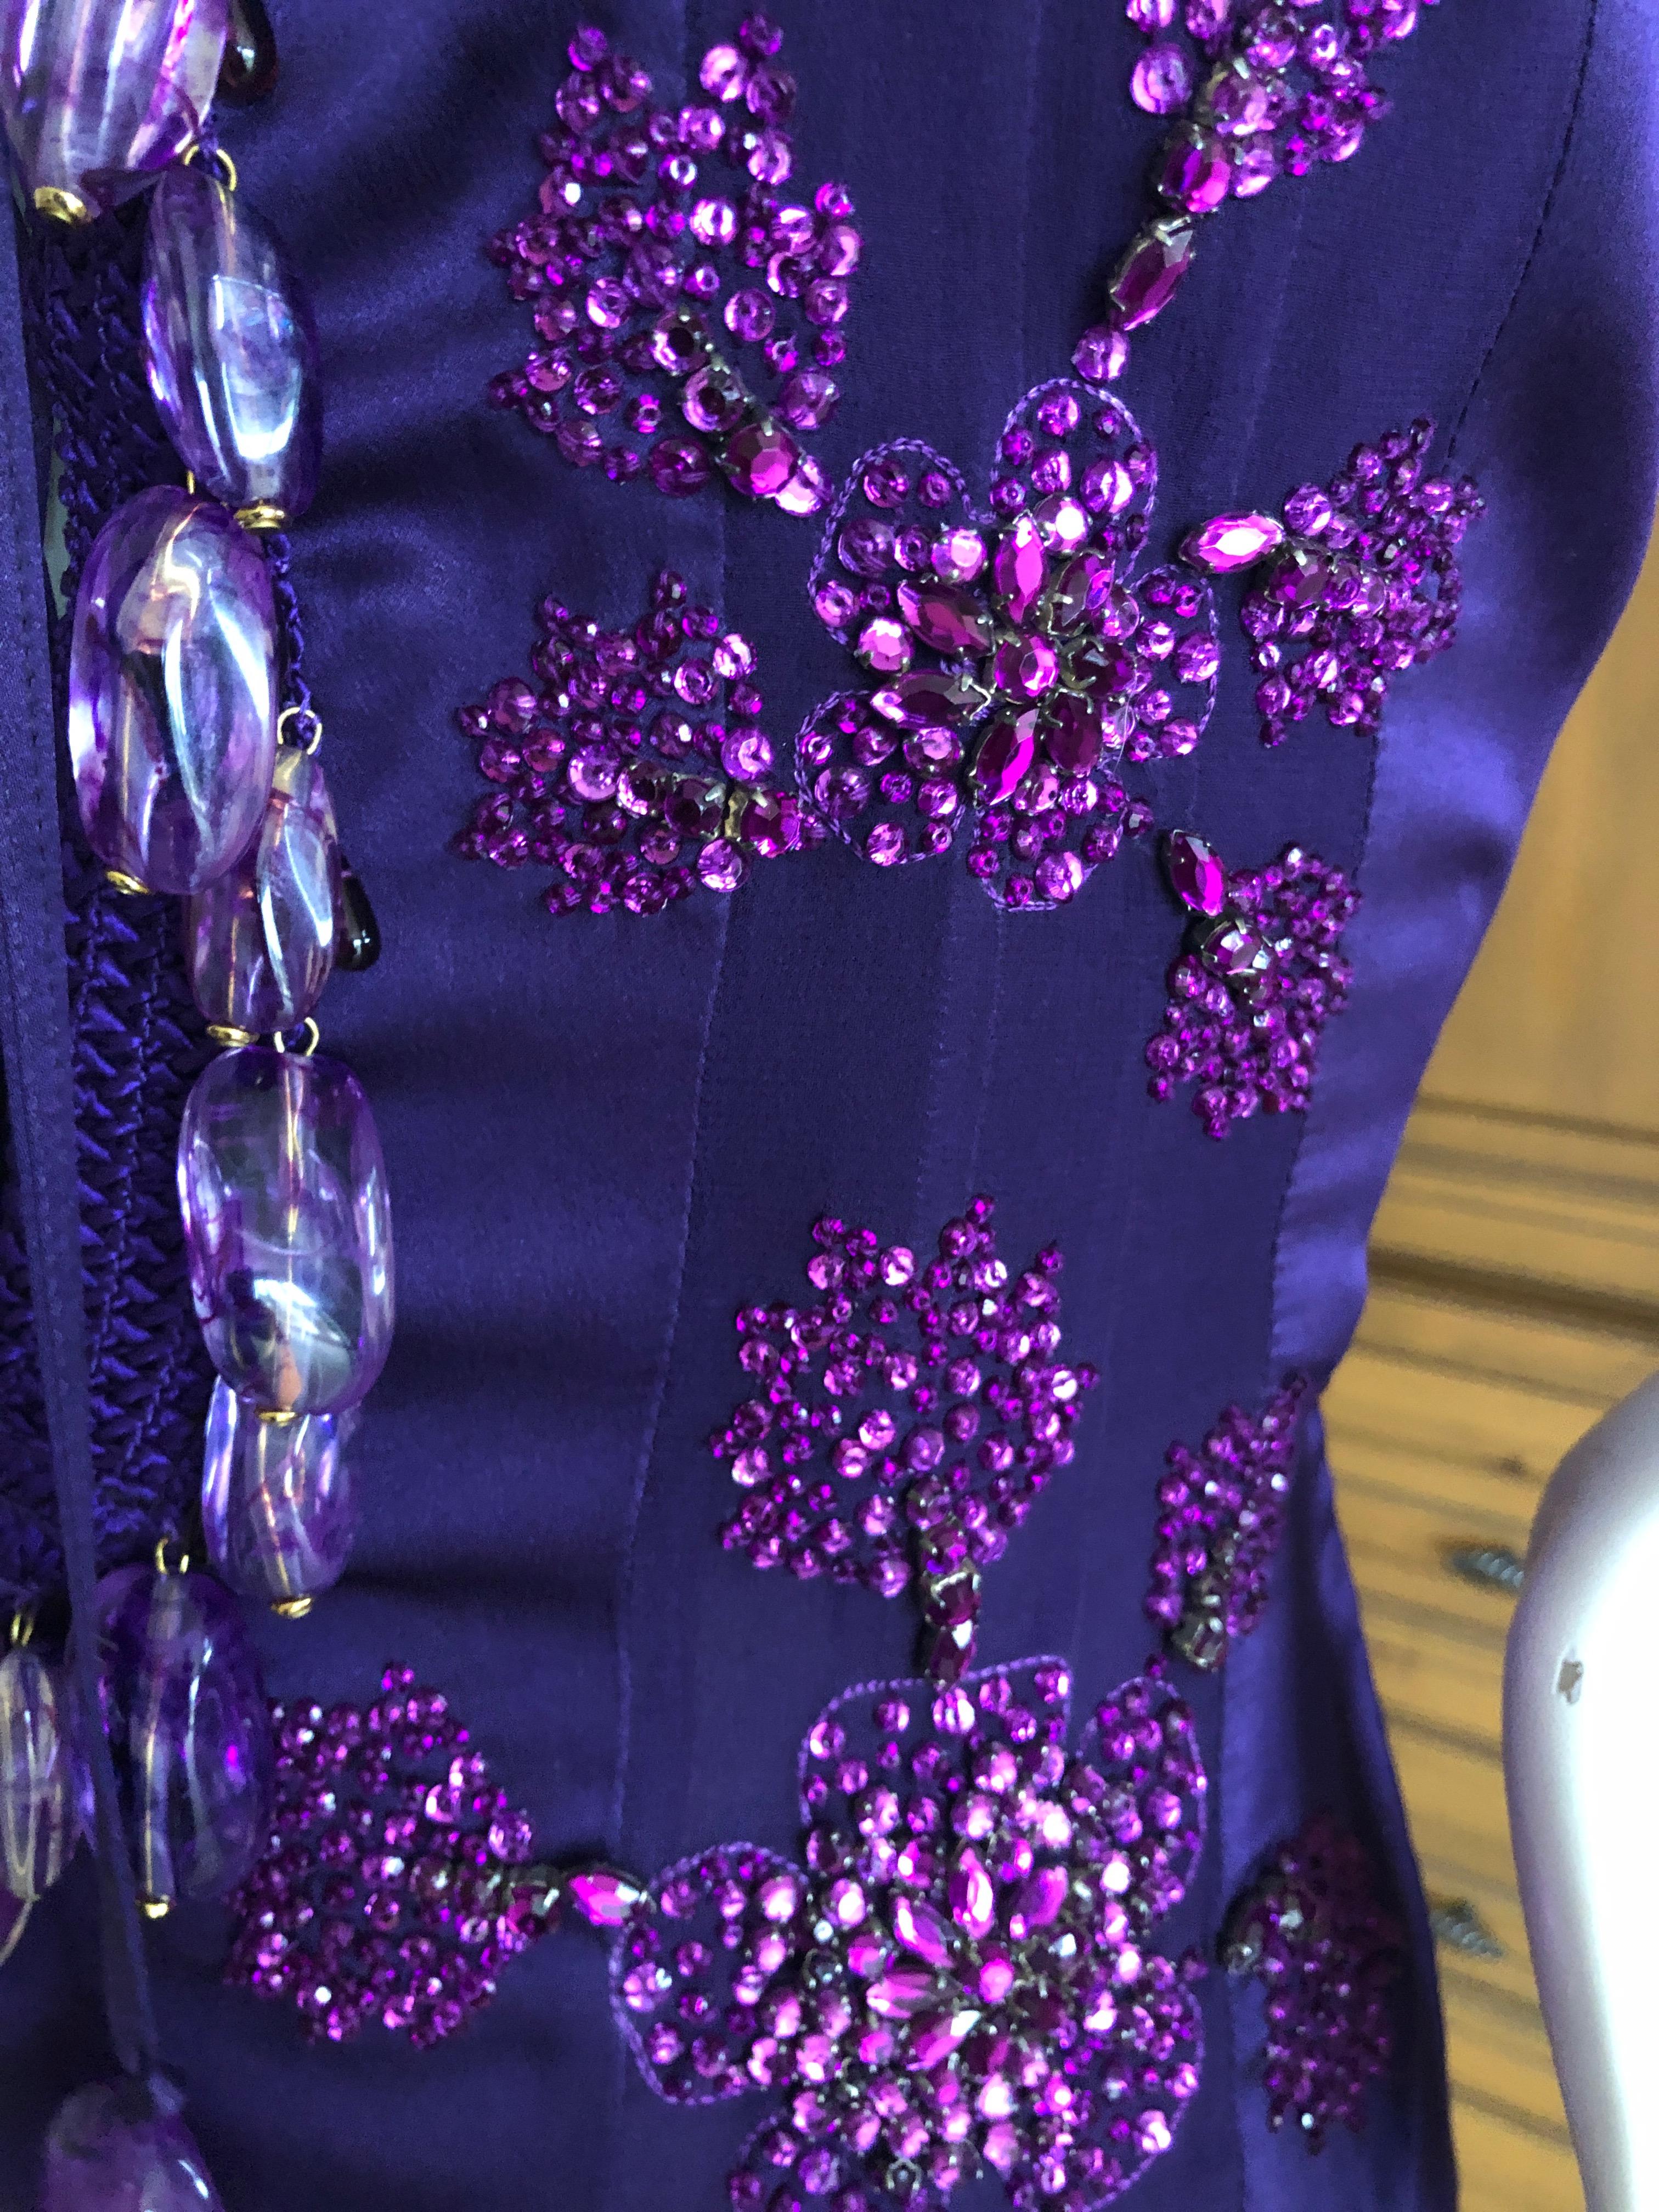 Emanuel Ungaro Amethyst Embellished Vintage Silk Evening Dress by Peter Dundas In Excellent Condition For Sale In Cloverdale, CA